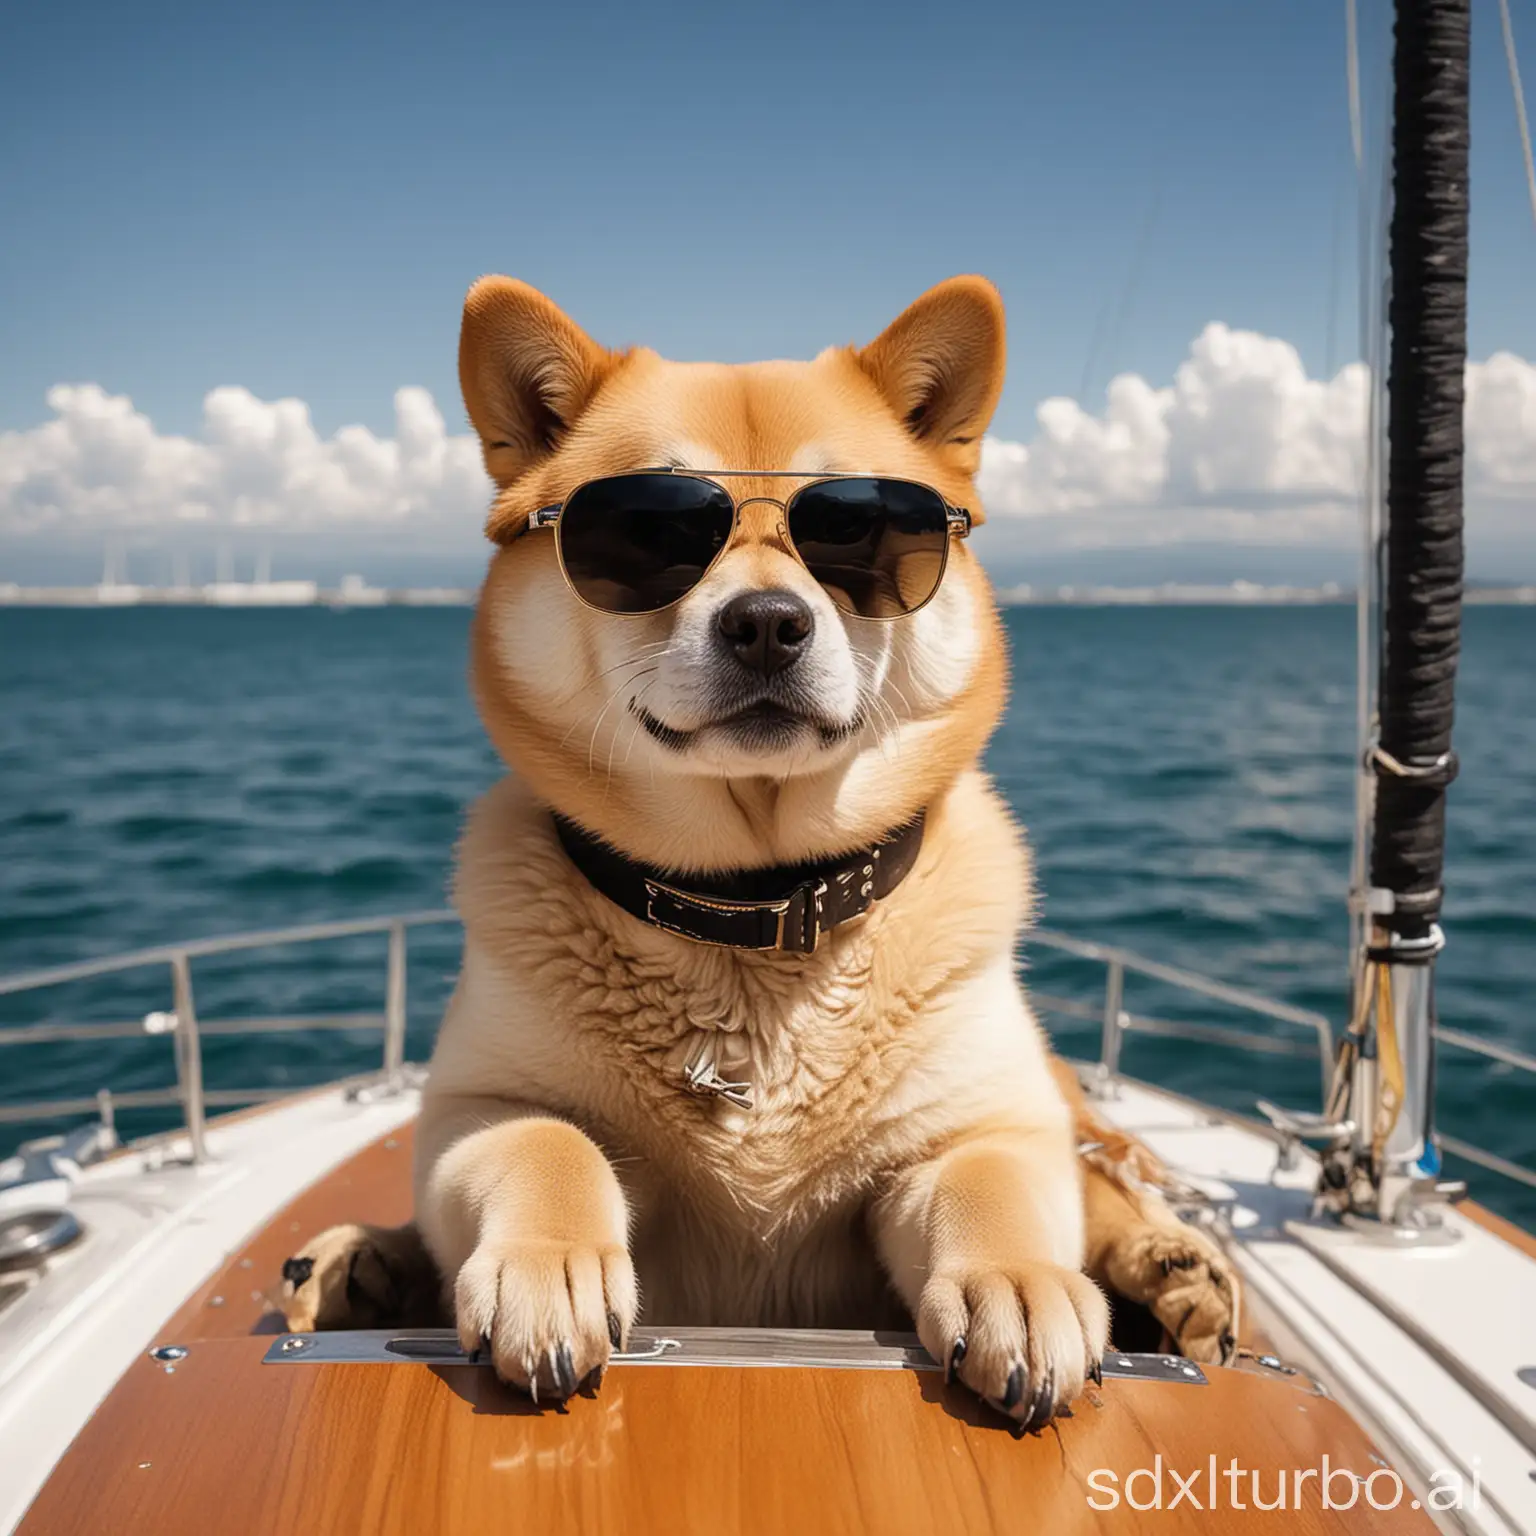 Cool-Doge-Dog-on-Sport-Yacht-Keelboat-Wearing-Sunglasses